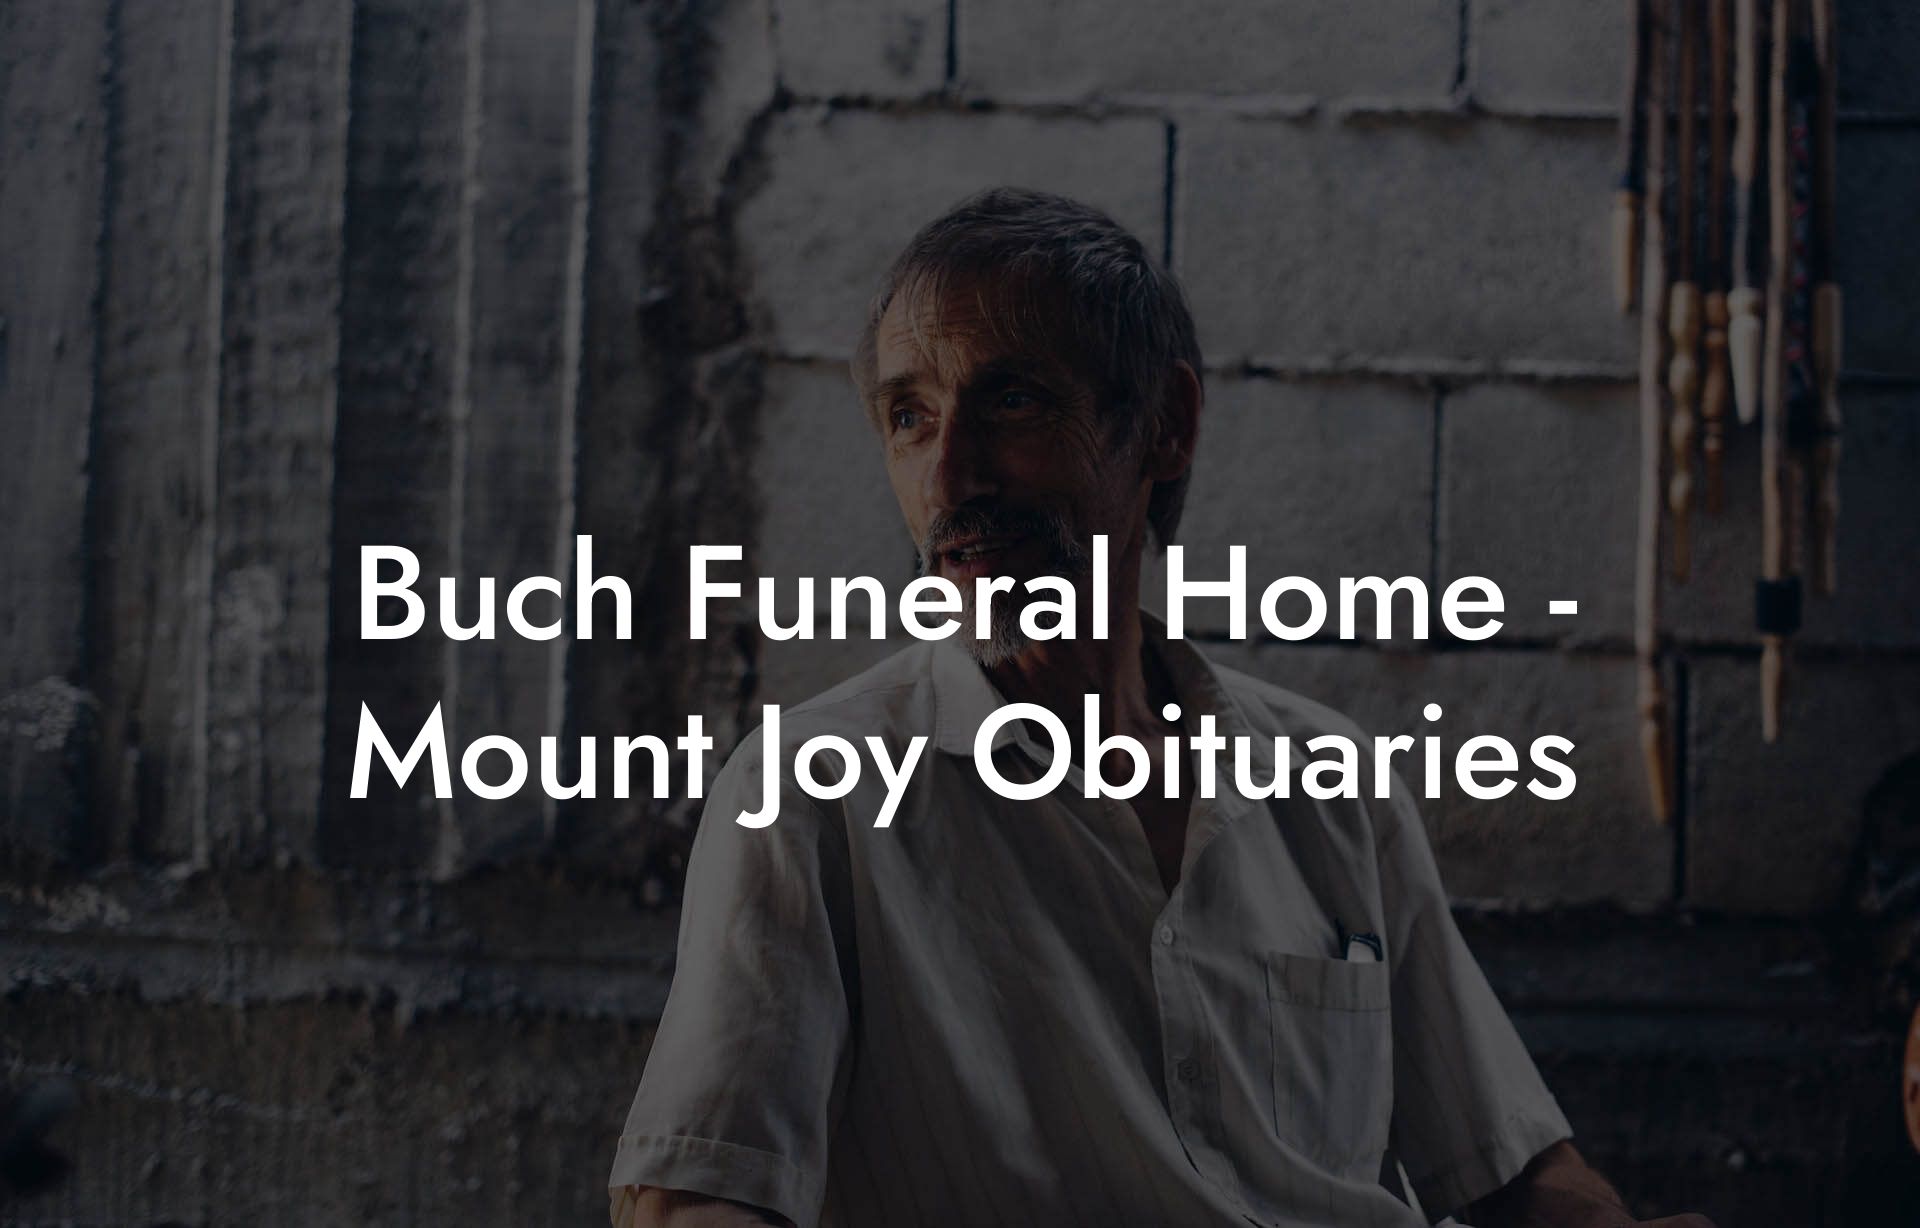 Buch Funeral Home - Mount Joy Obituaries